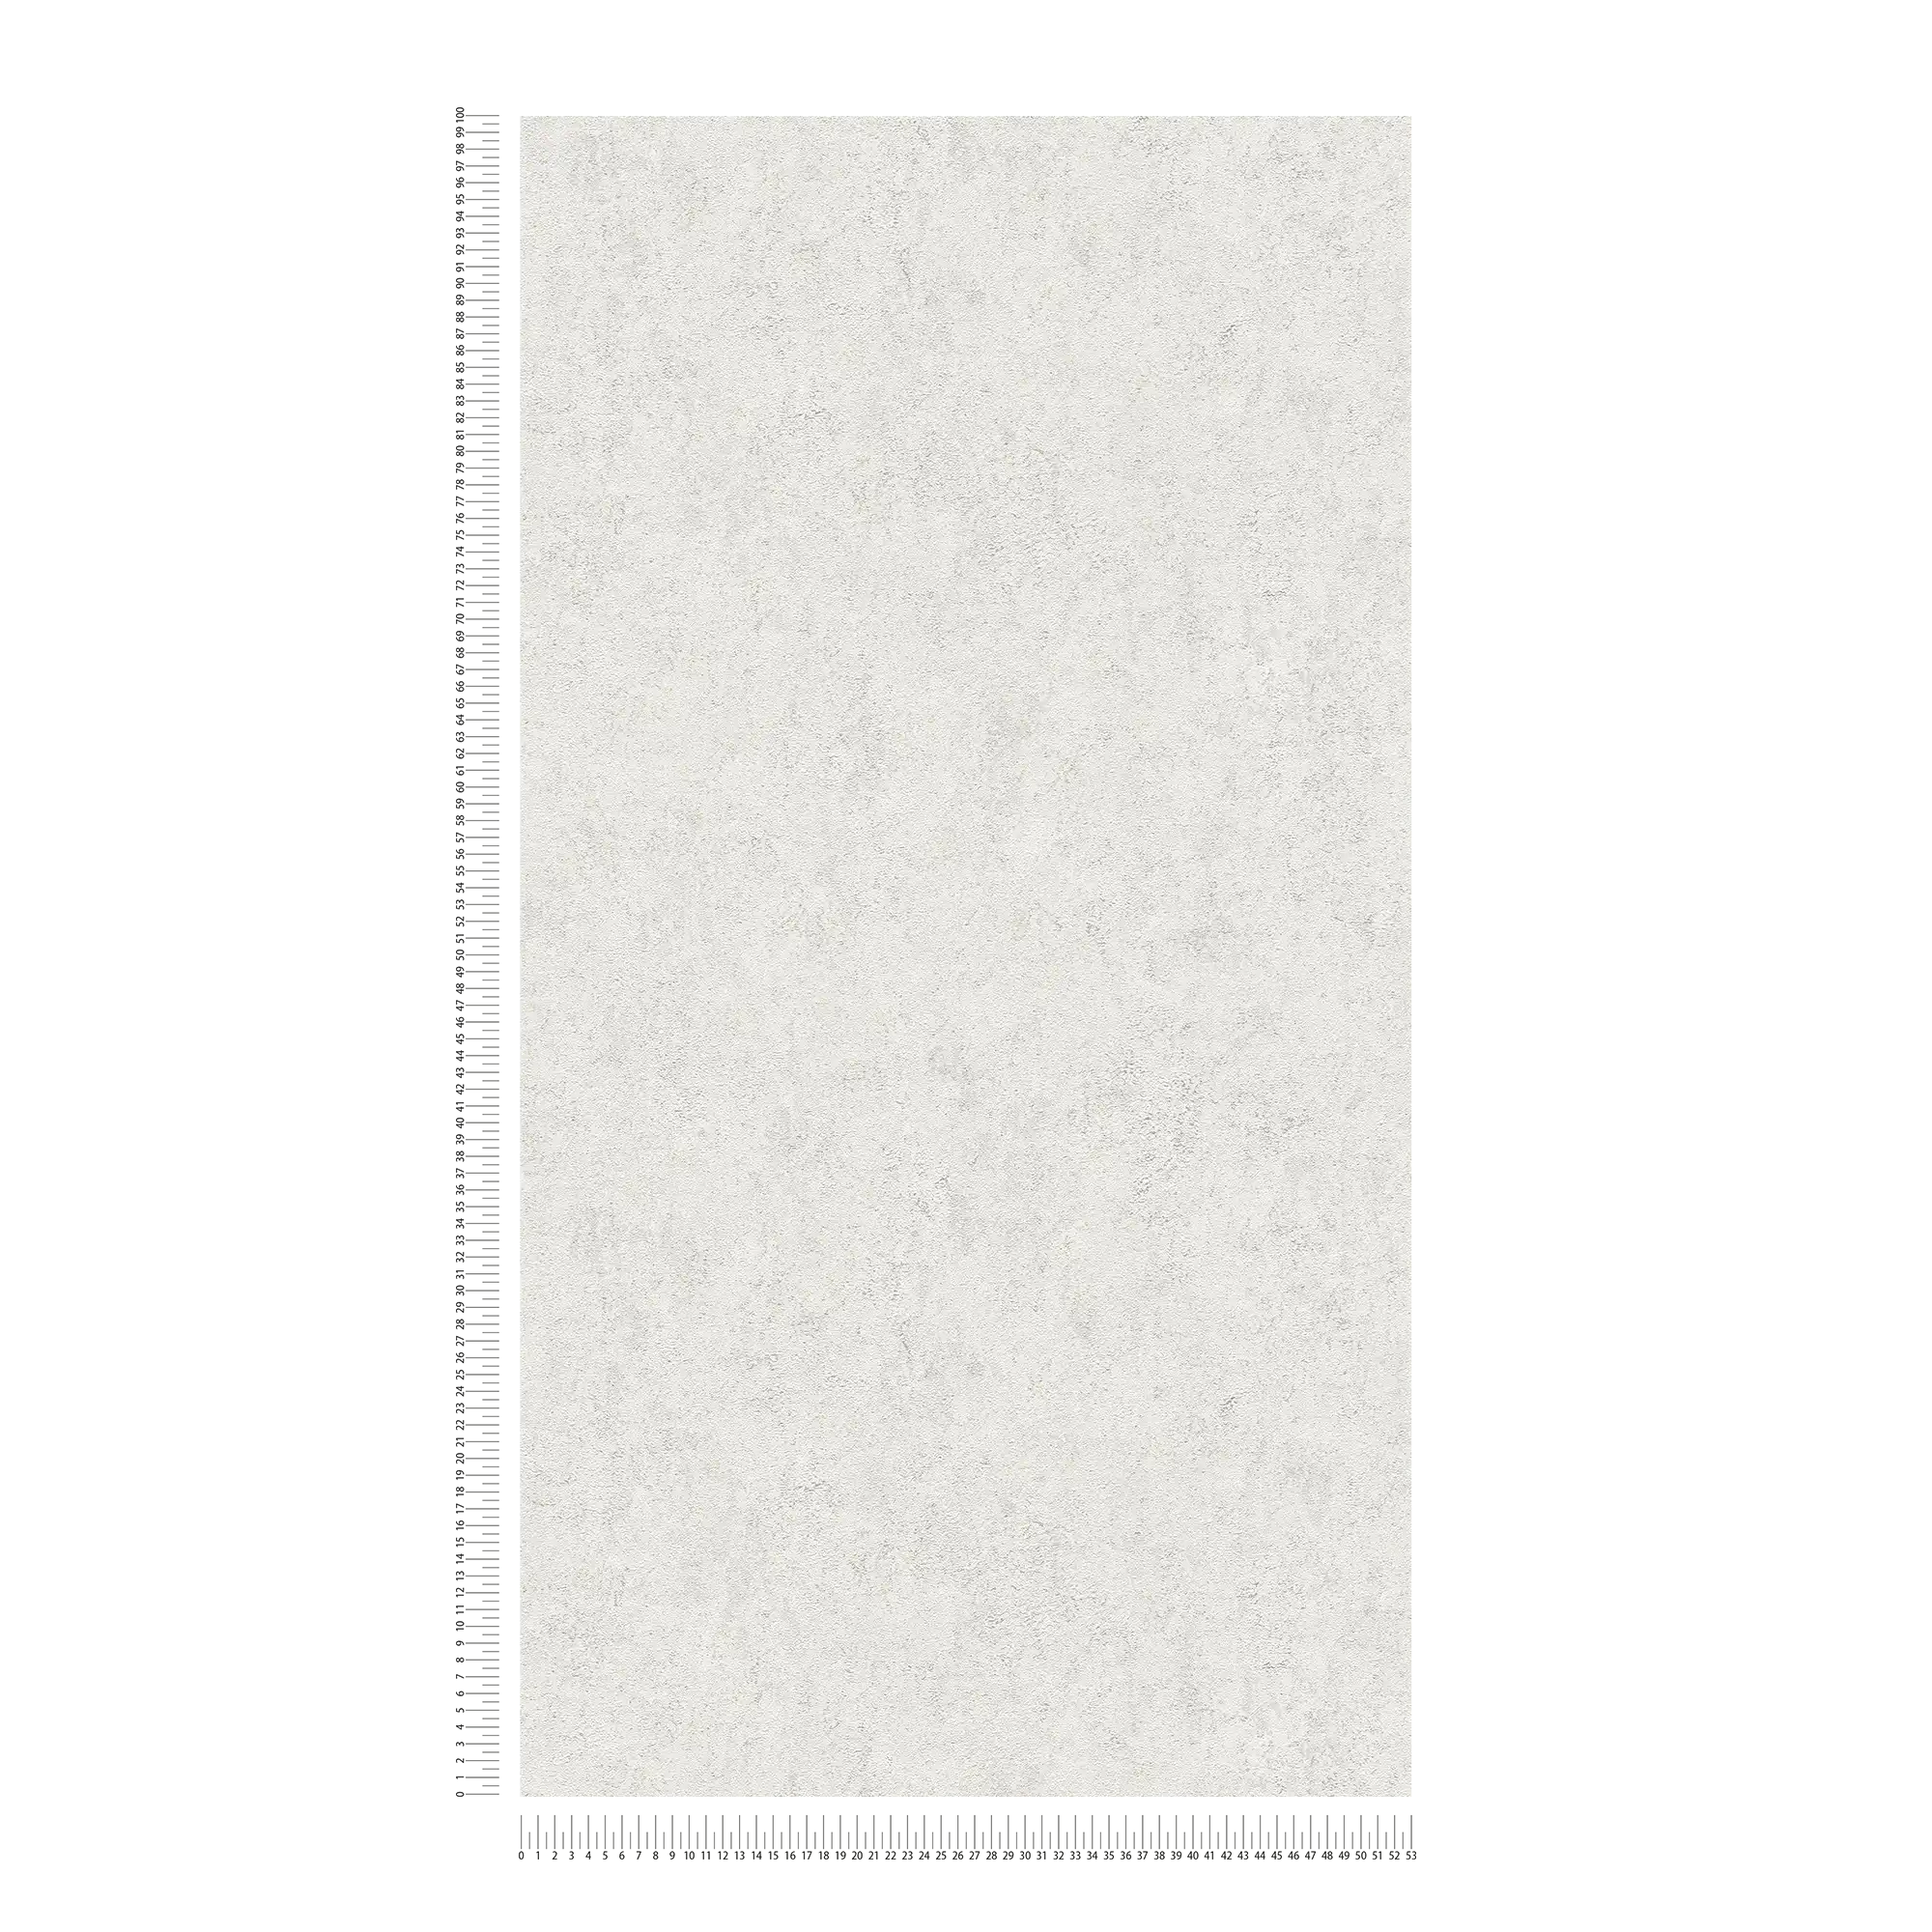             Carta da parati a tinta unita con effetto metallico lucido - bianco
        